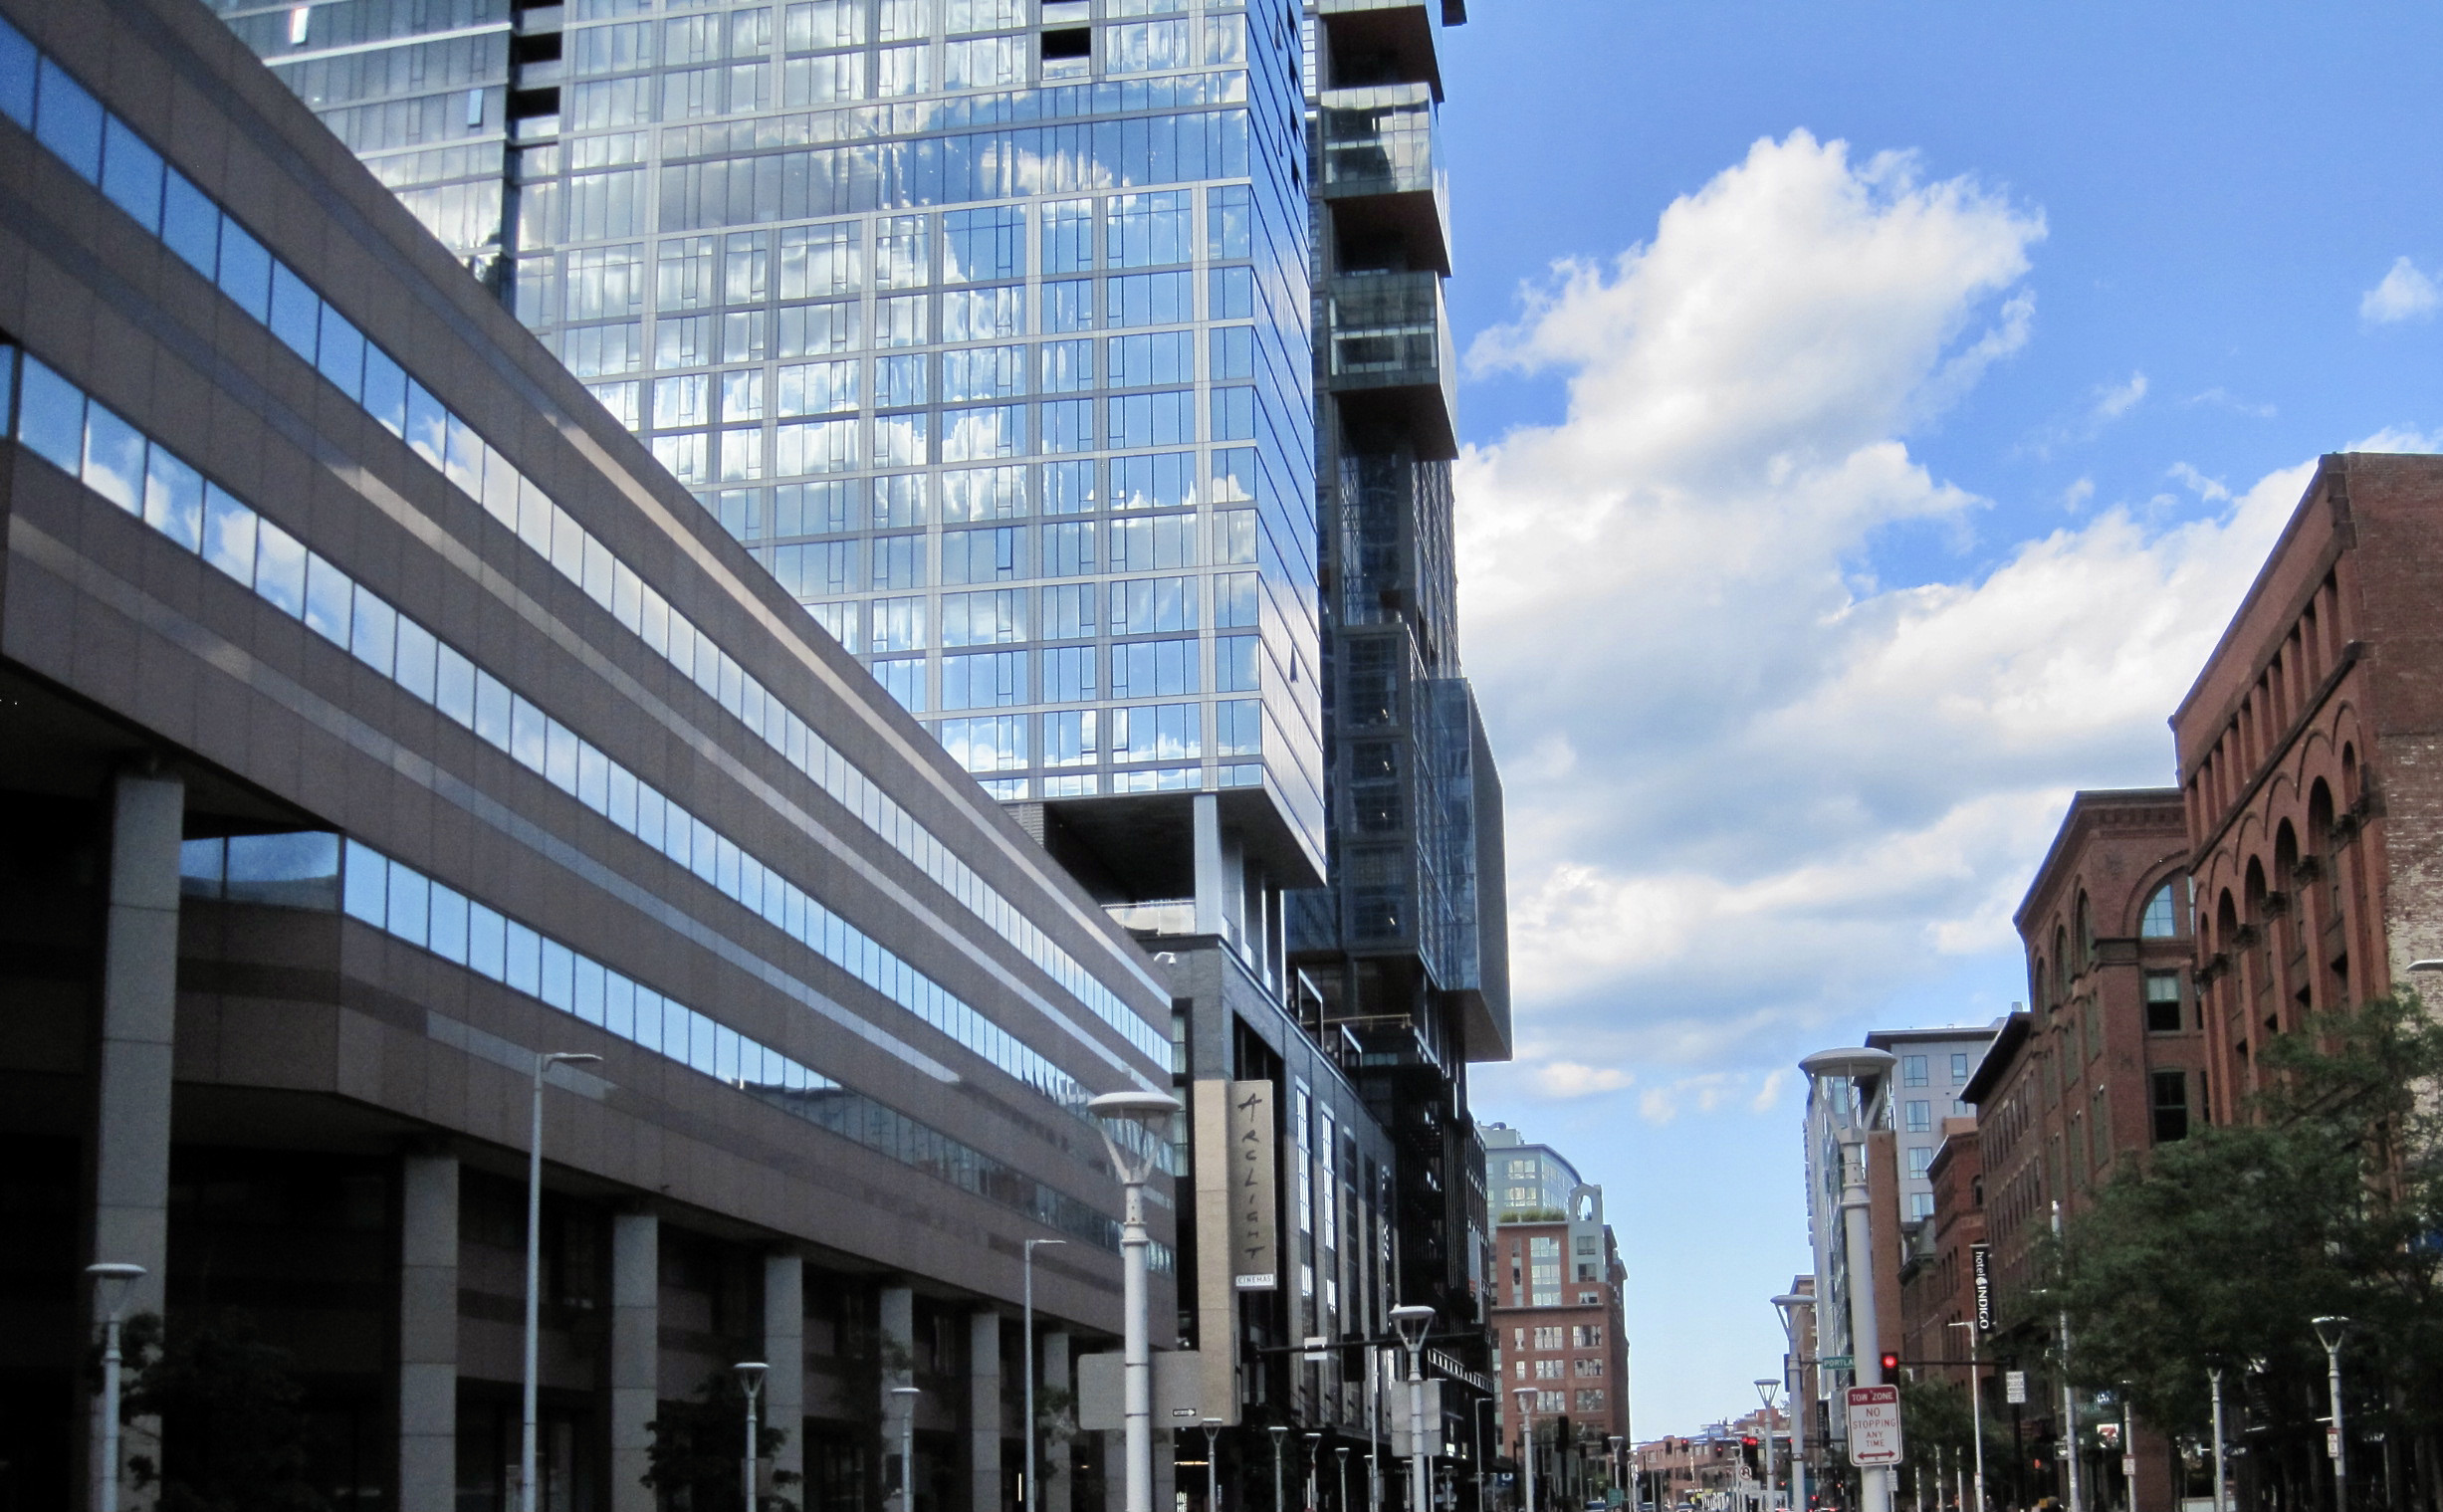 Photo of buildings along Causeway Street in Boston's West End neighborhood.